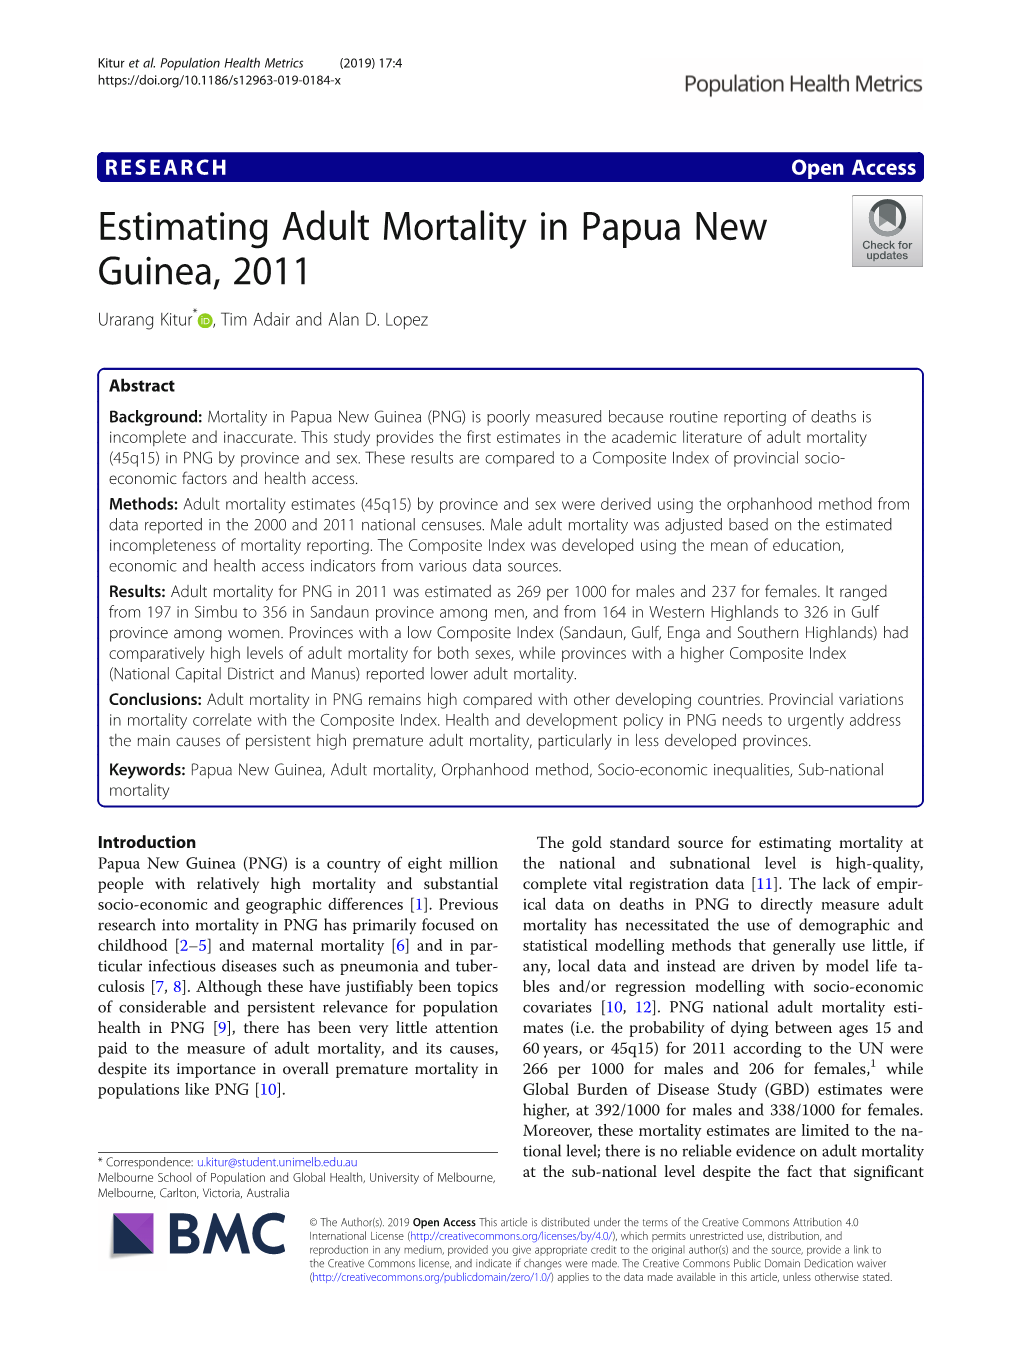 Estimating Adult Mortality in Papua New Guinea, 2011 Urarang Kitur* , Tim Adair and Alan D